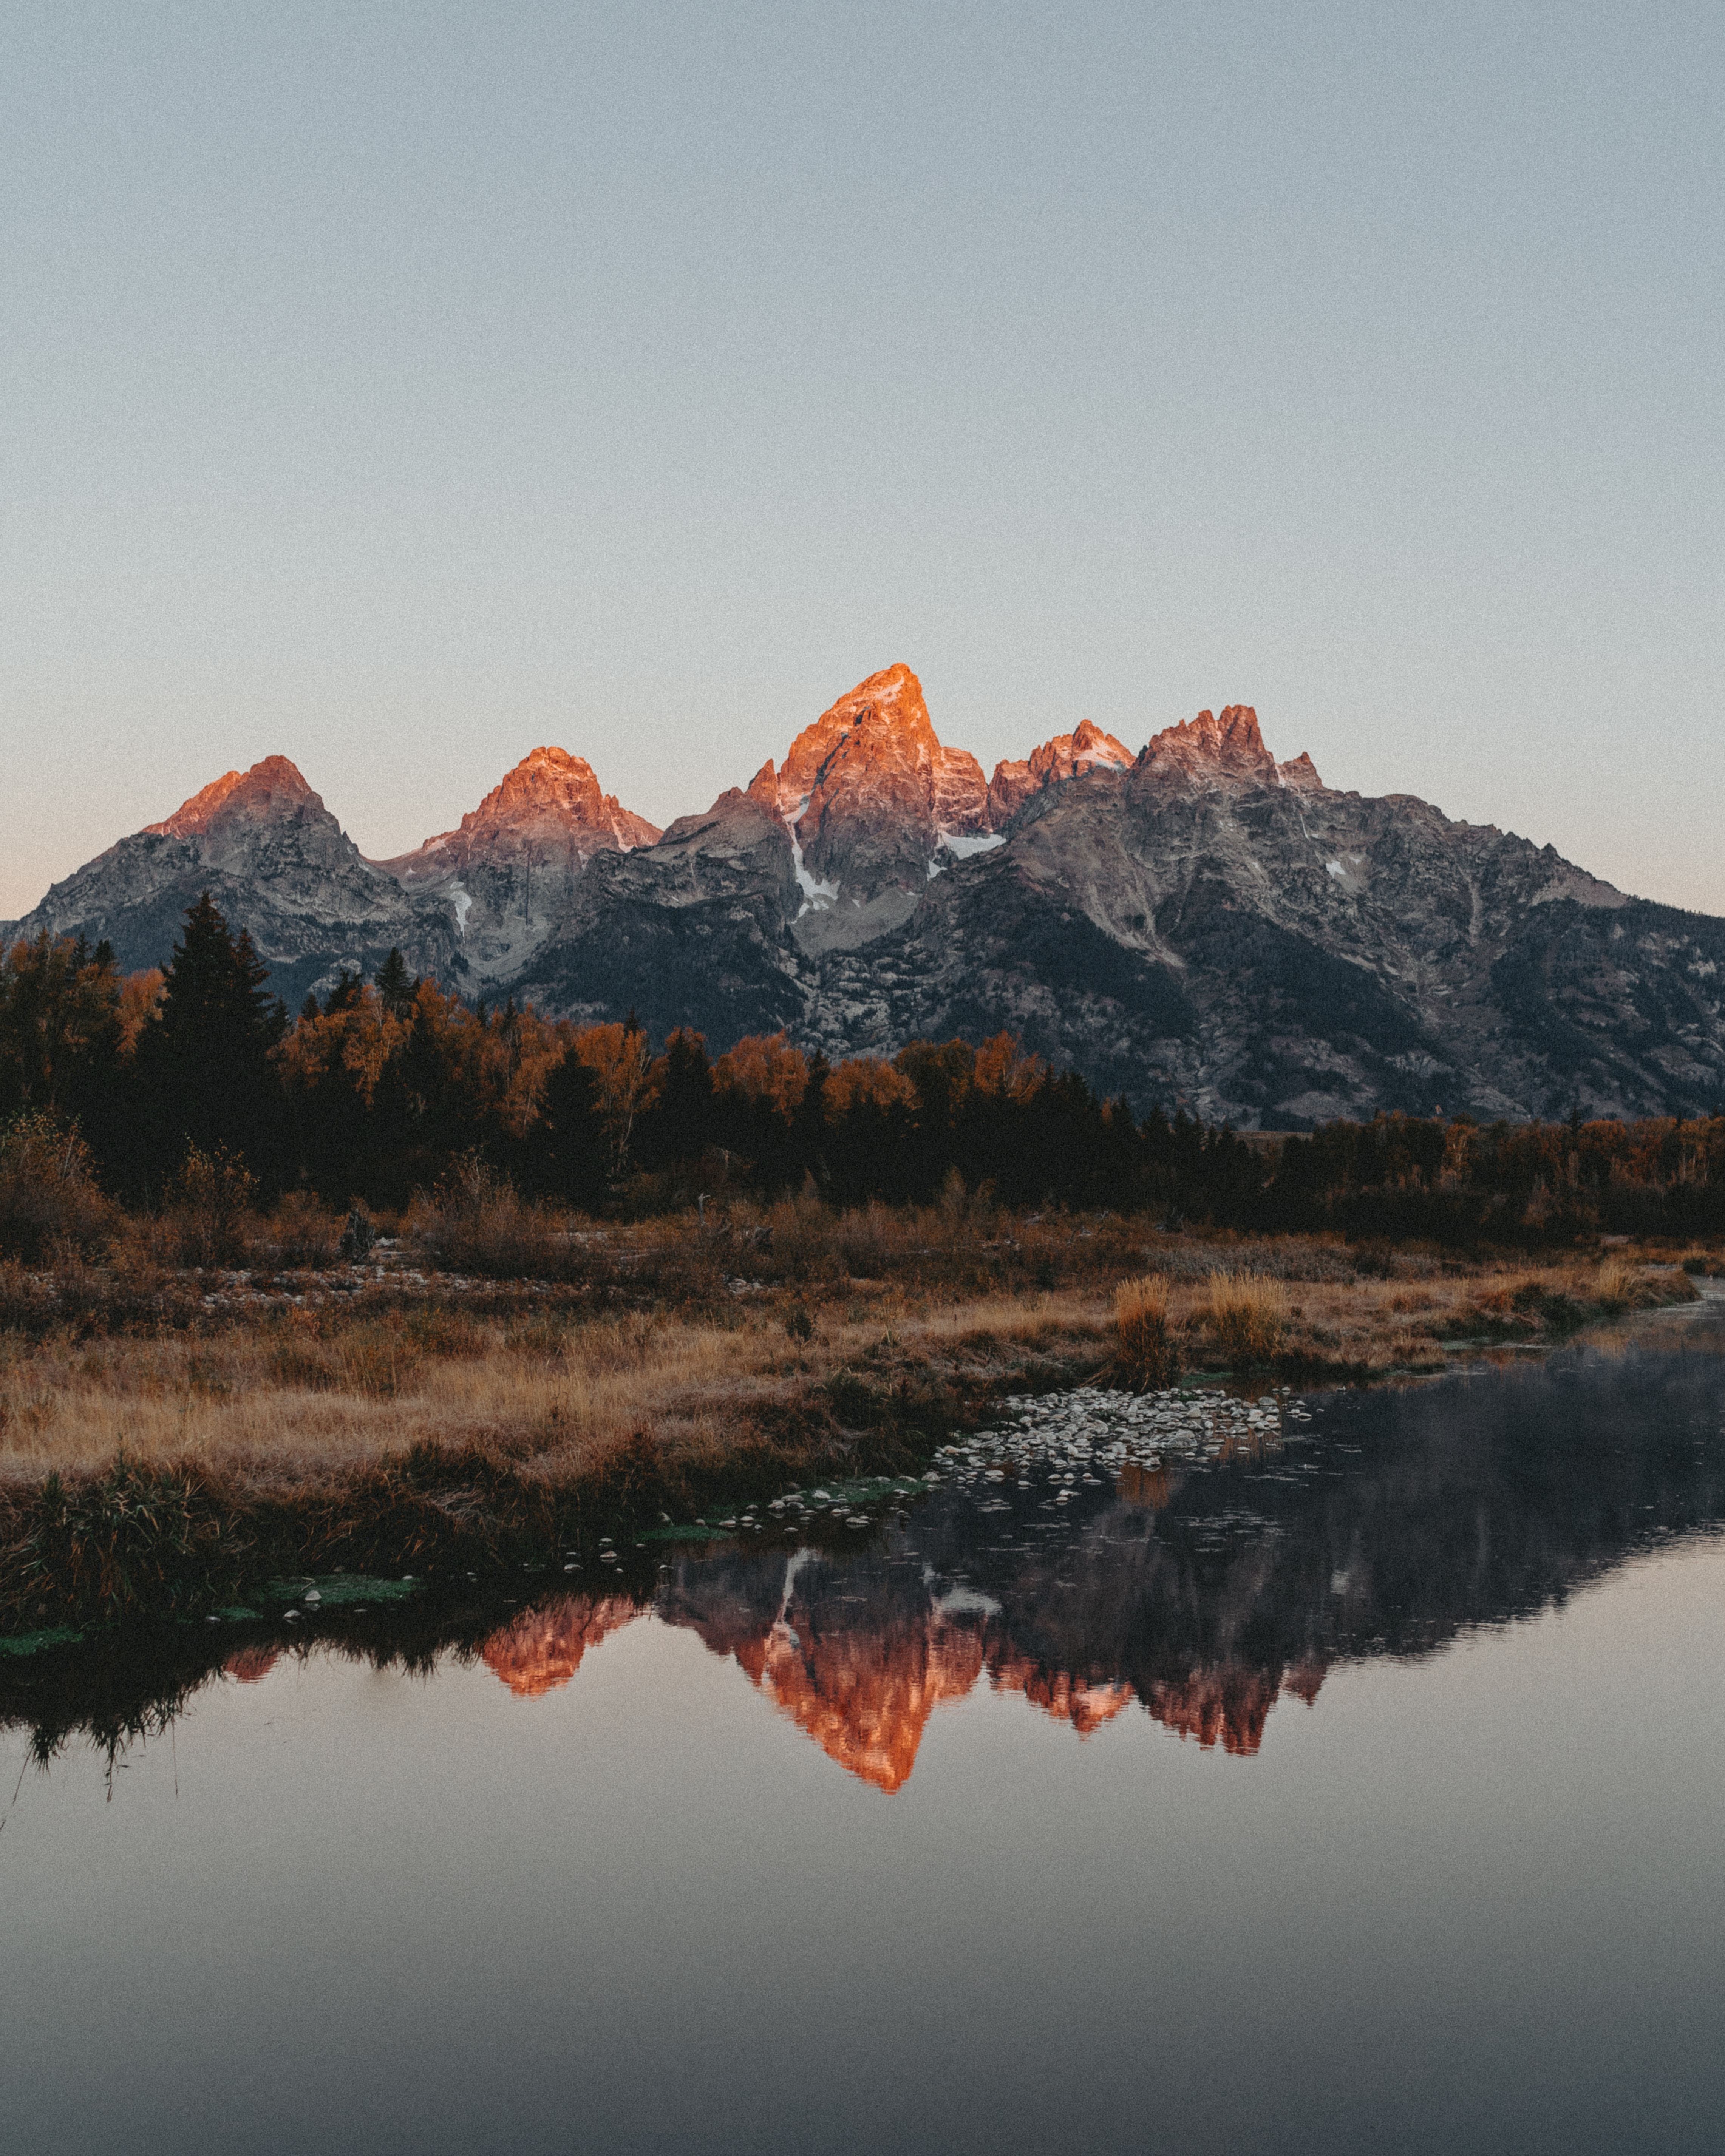 Descarga gratis la imagen Montañas, Lago, Naturaleza, Agua, Reflexión en el escritorio de tu PC